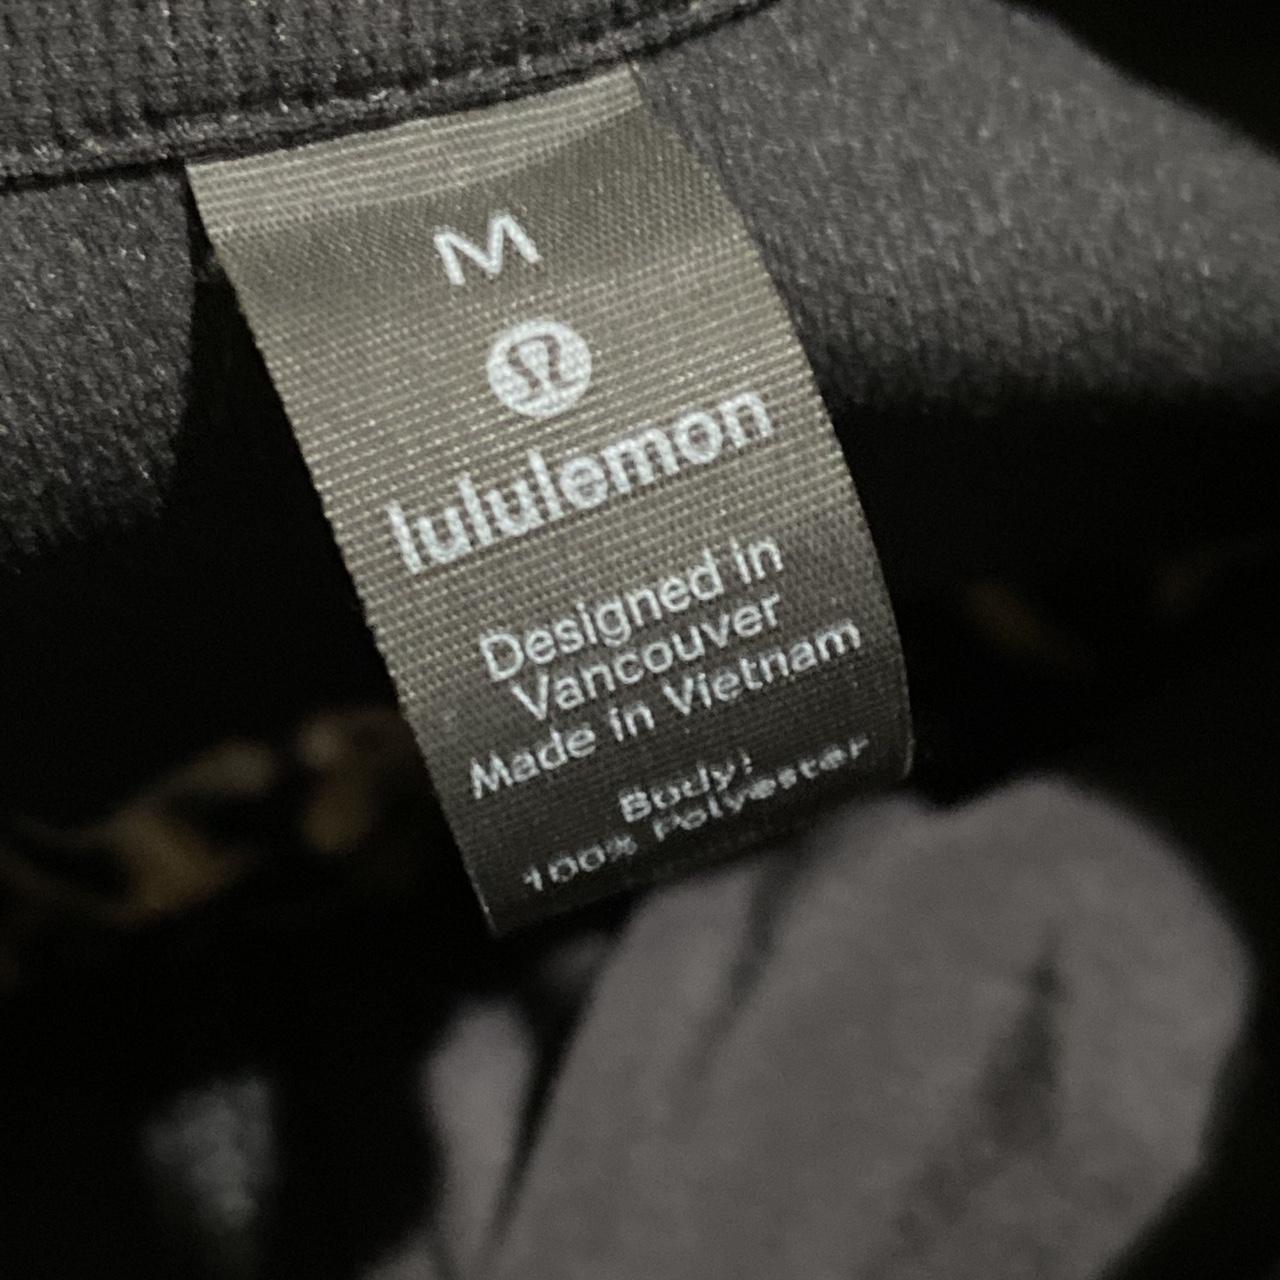 Lululemon Embroidered Jacket In Good Gently Used - Depop